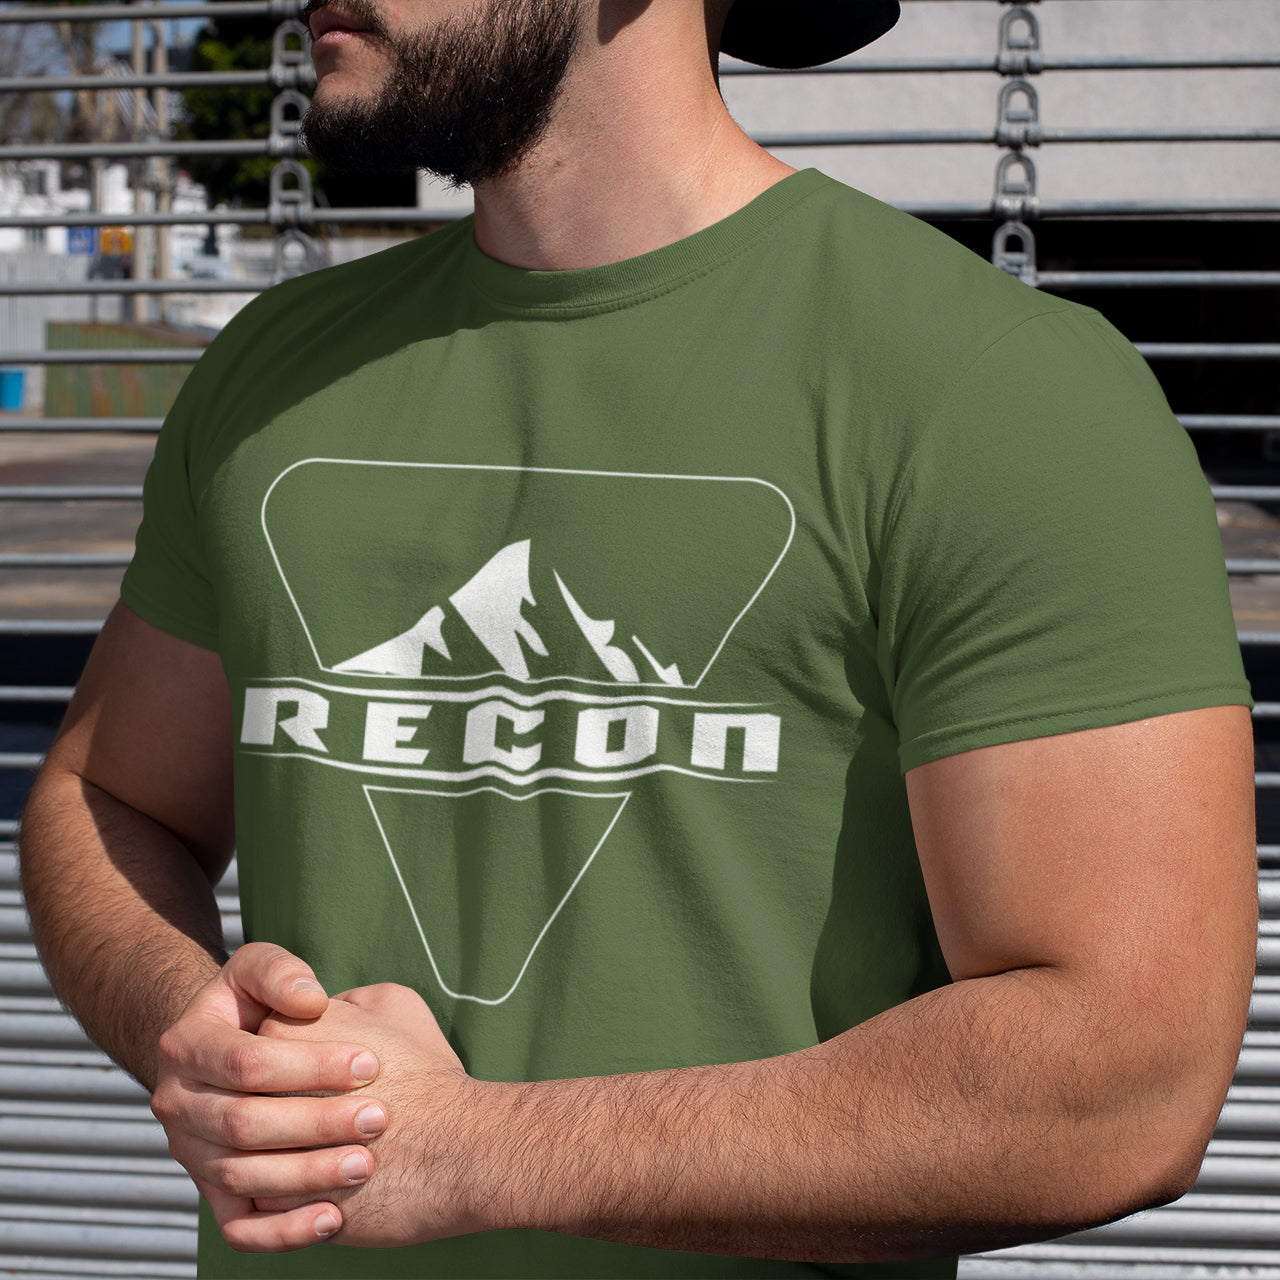 Recon T shirt - Classic